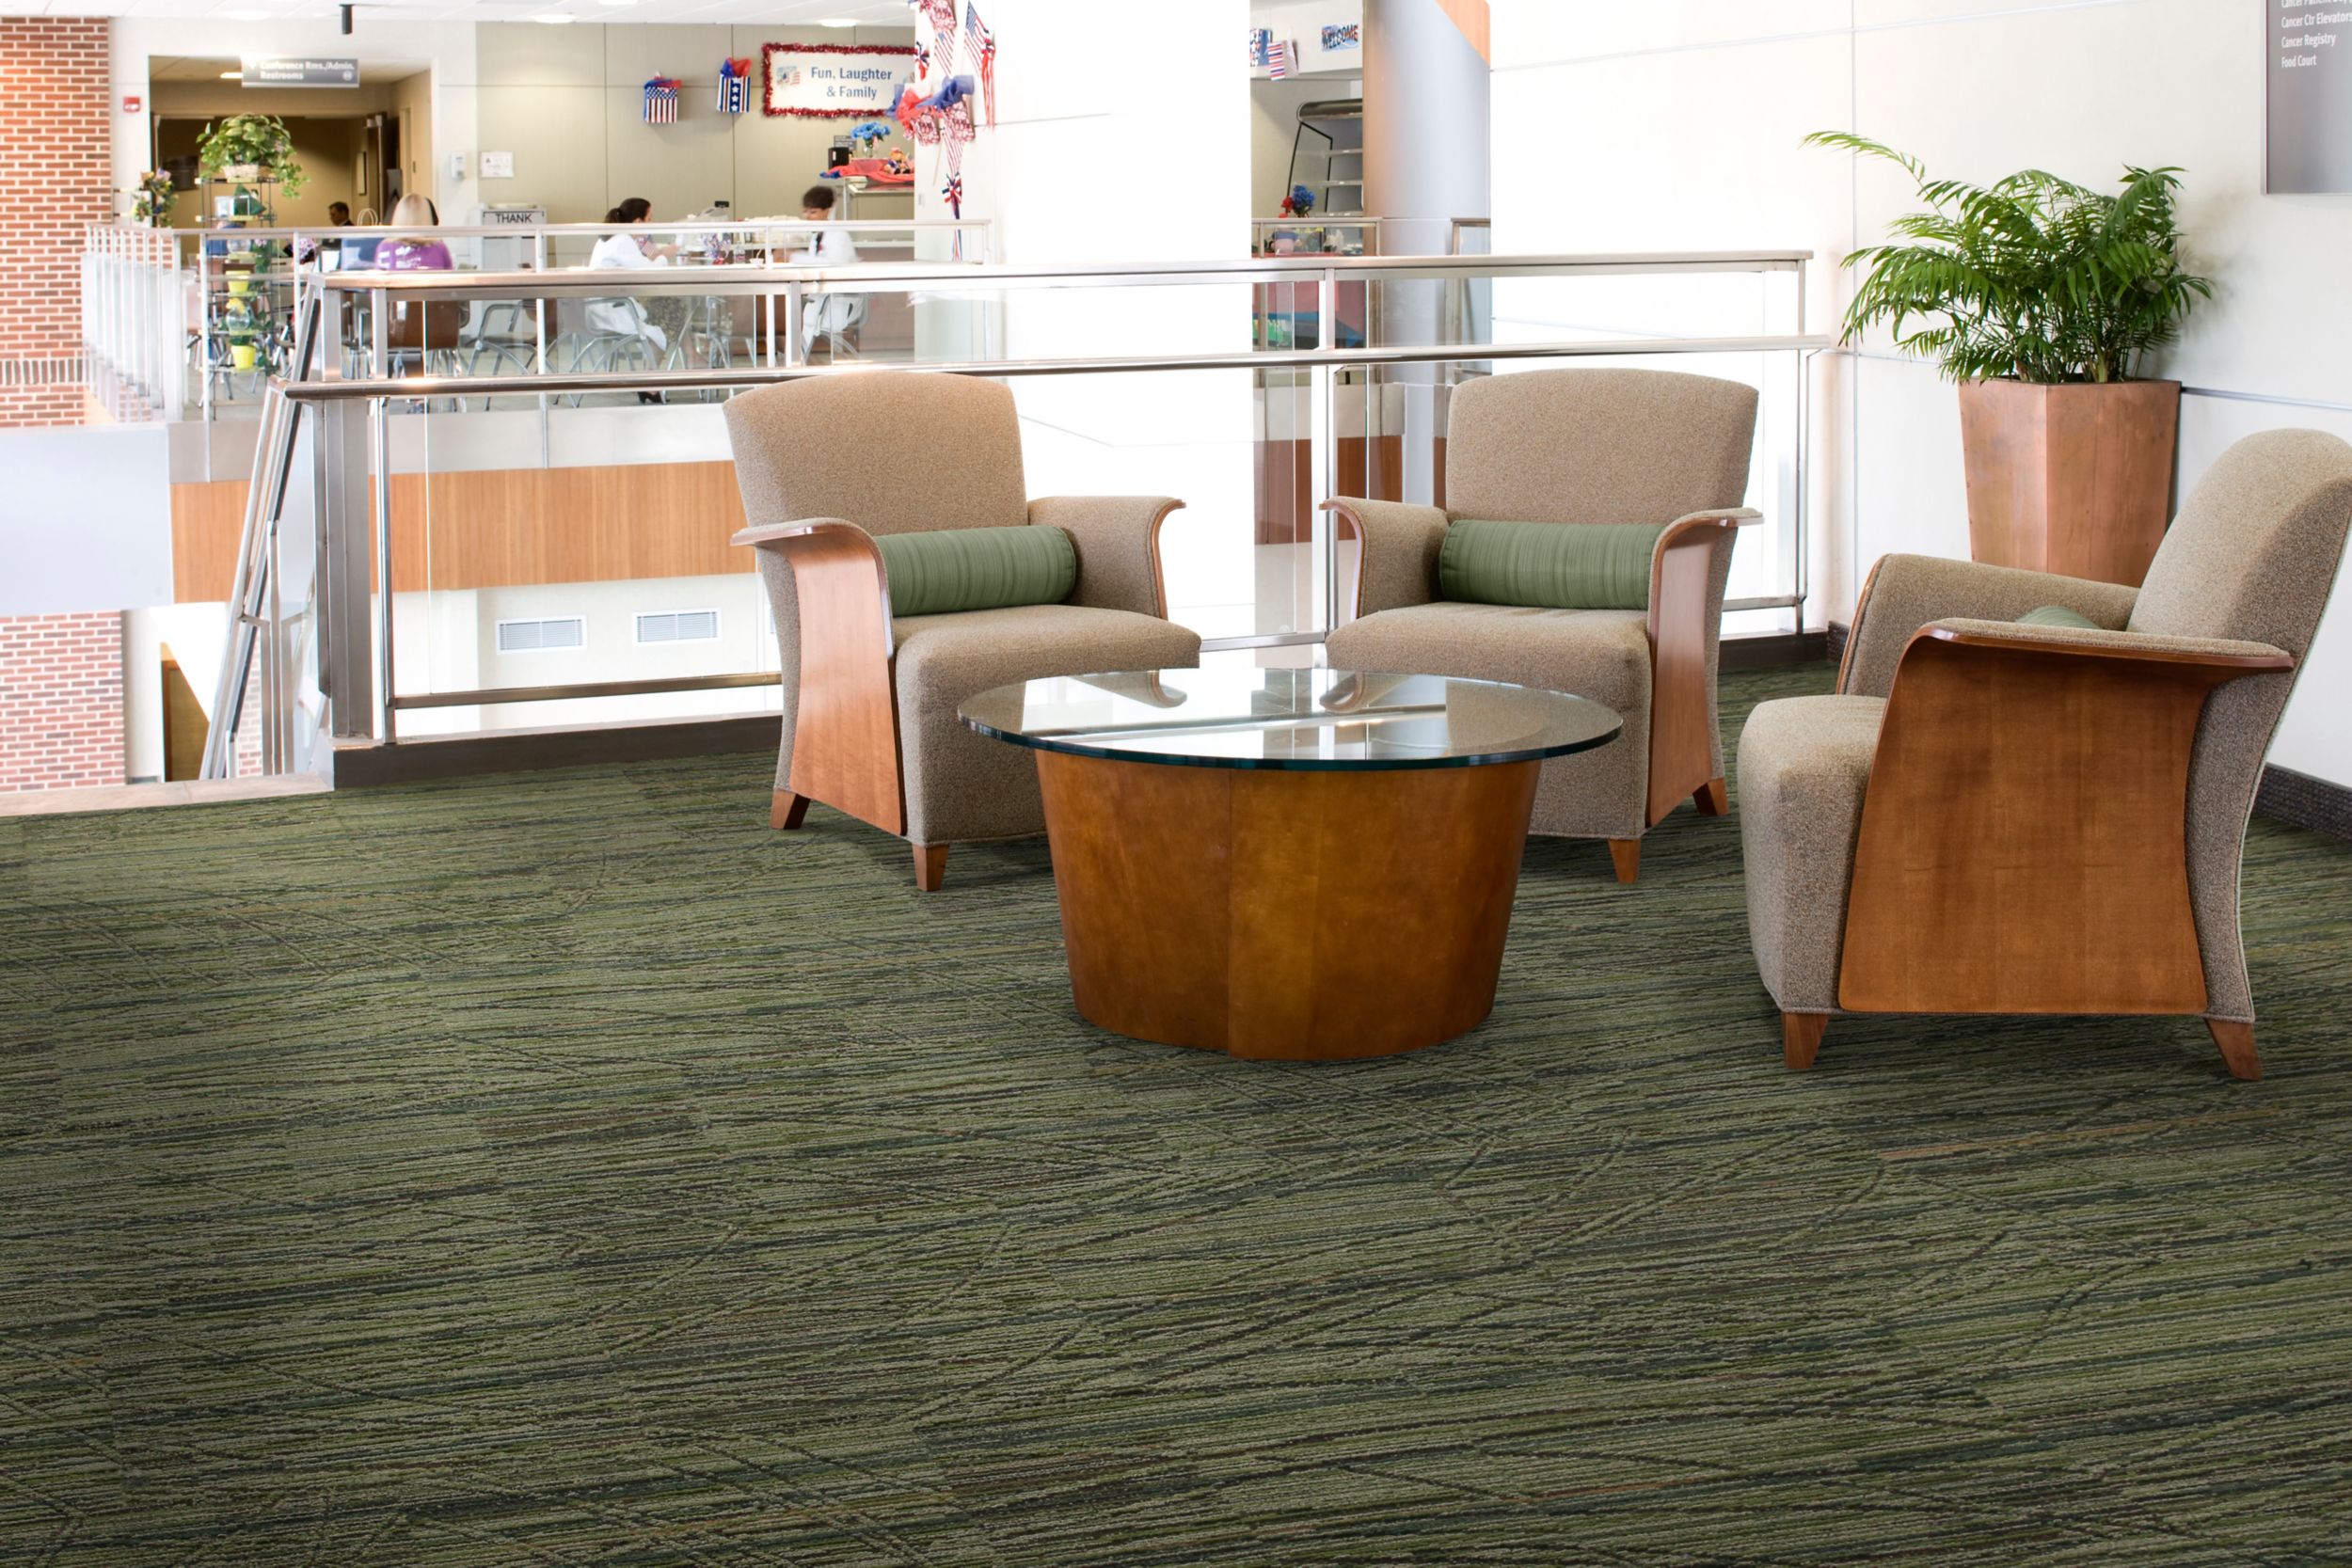 Interface Prairie Grass carpet tile in waiting area imagen número 11